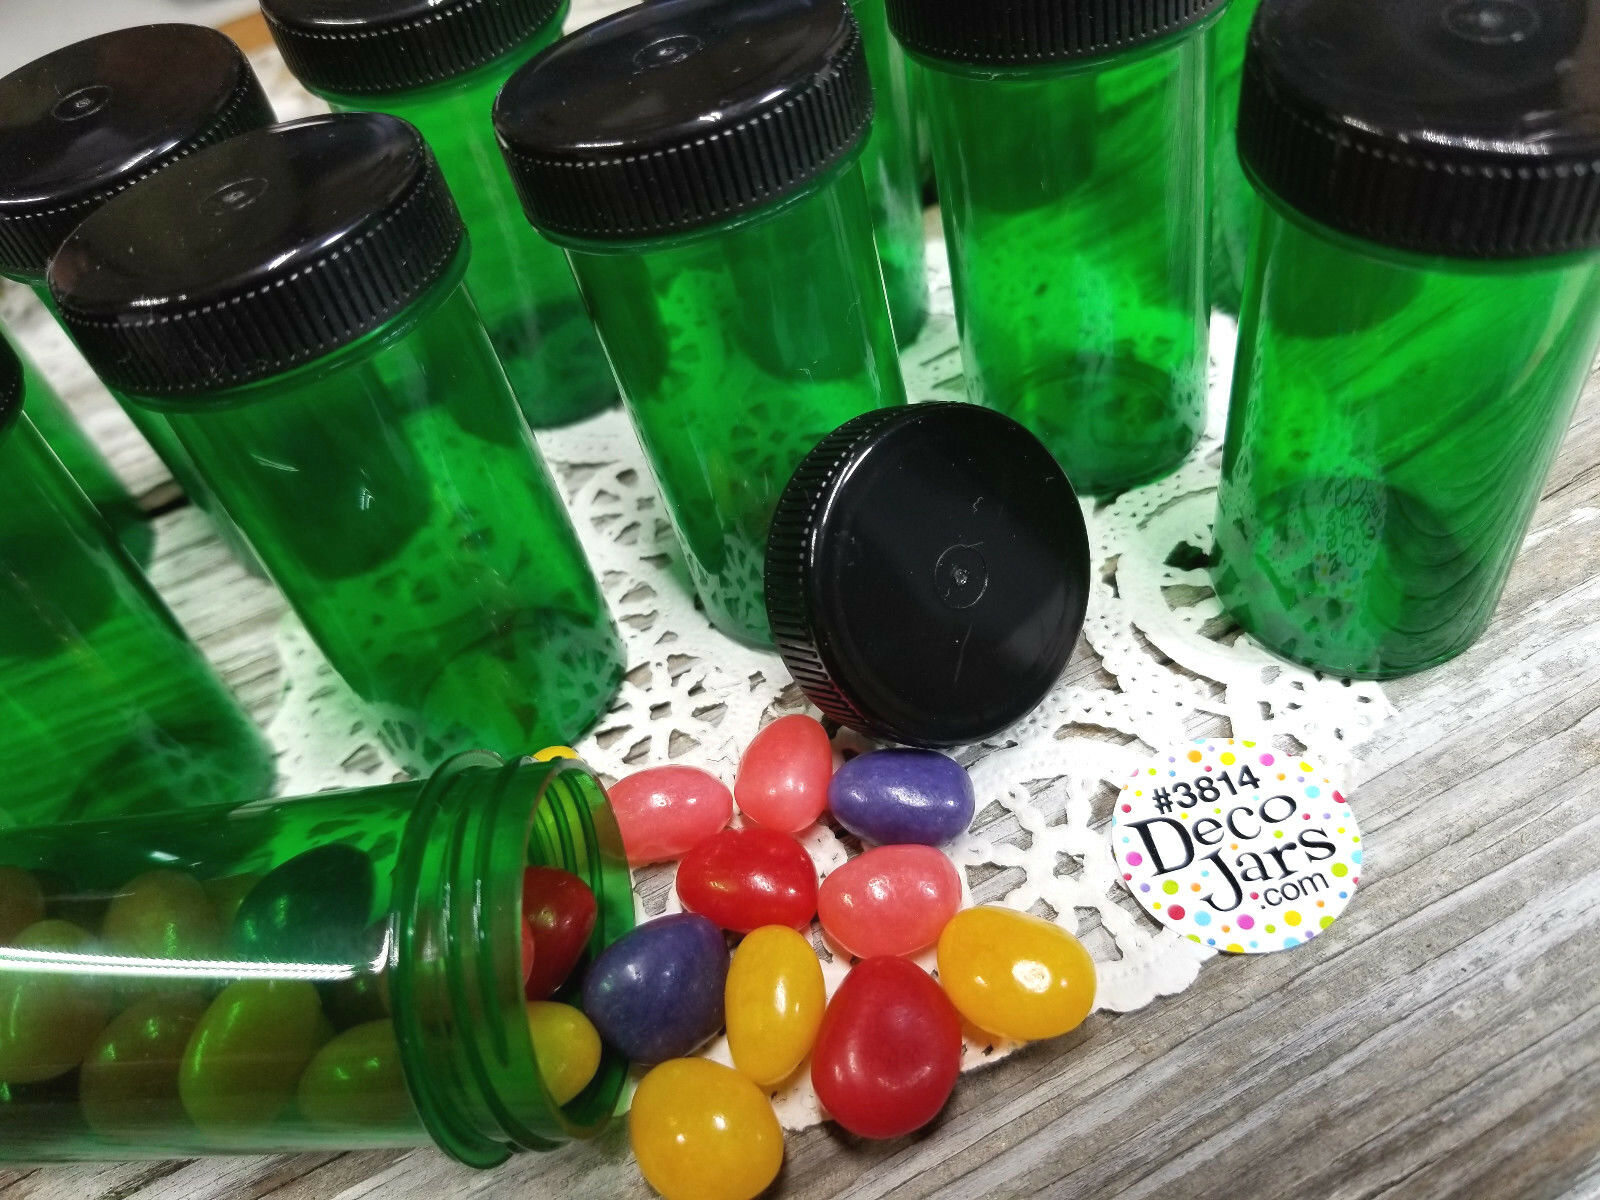 18 Green Pill Herb Snack Bottles Jars Black Caps 1.50 Ounce Size 3814 Decojars